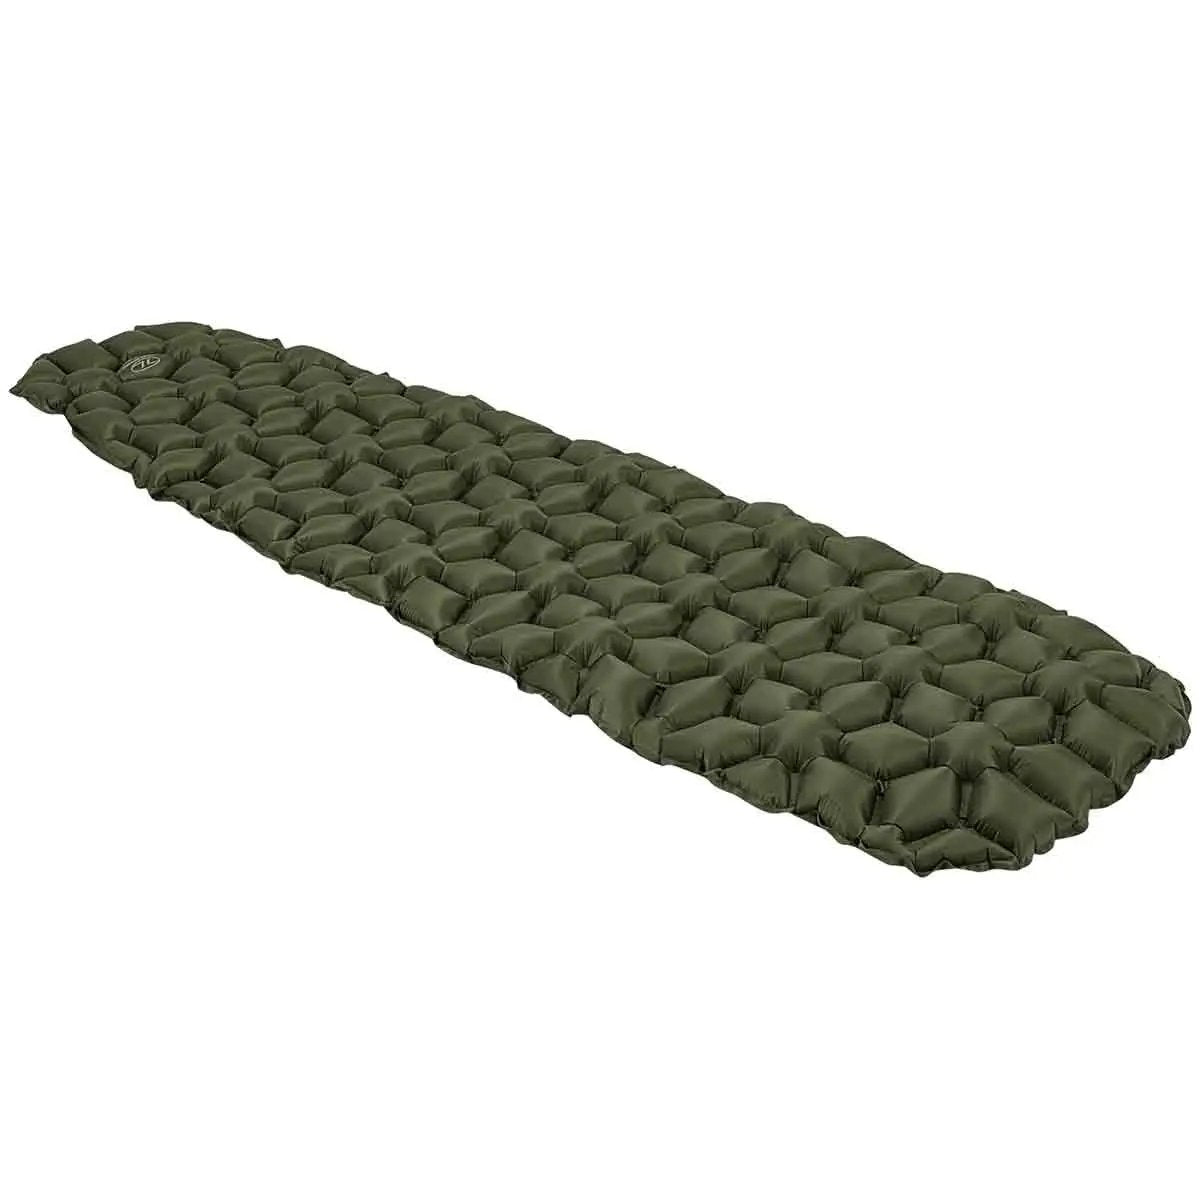 Highlander Nap-Pak Inflatable Sleeping Mattress Olive Green - John Bull Clothing